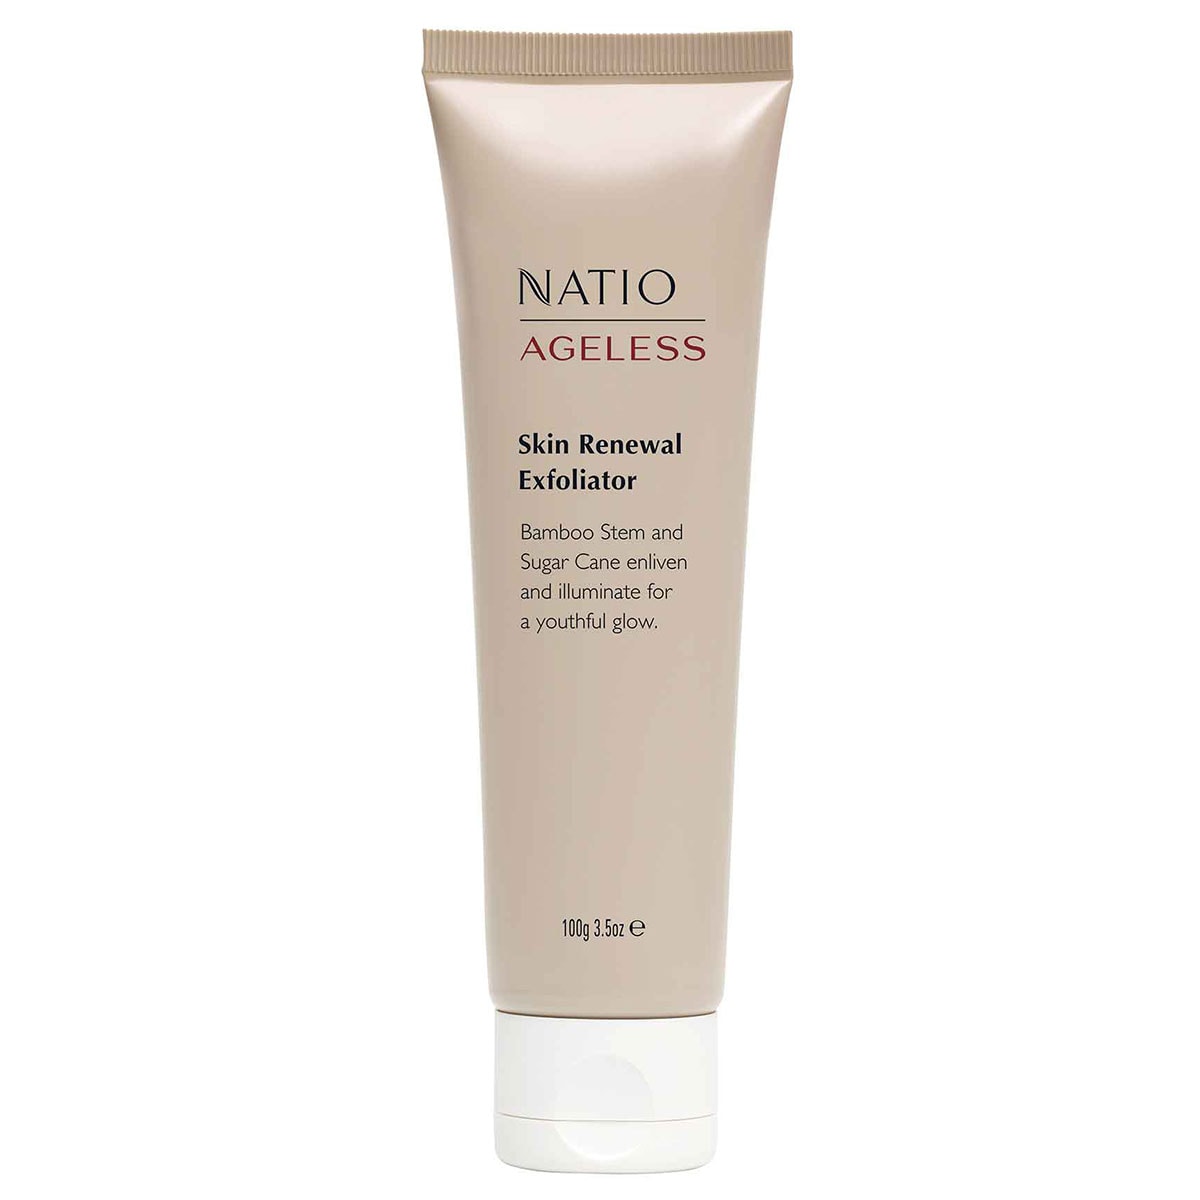 Natio Ageless Skin Renewal Exfoliator 100g